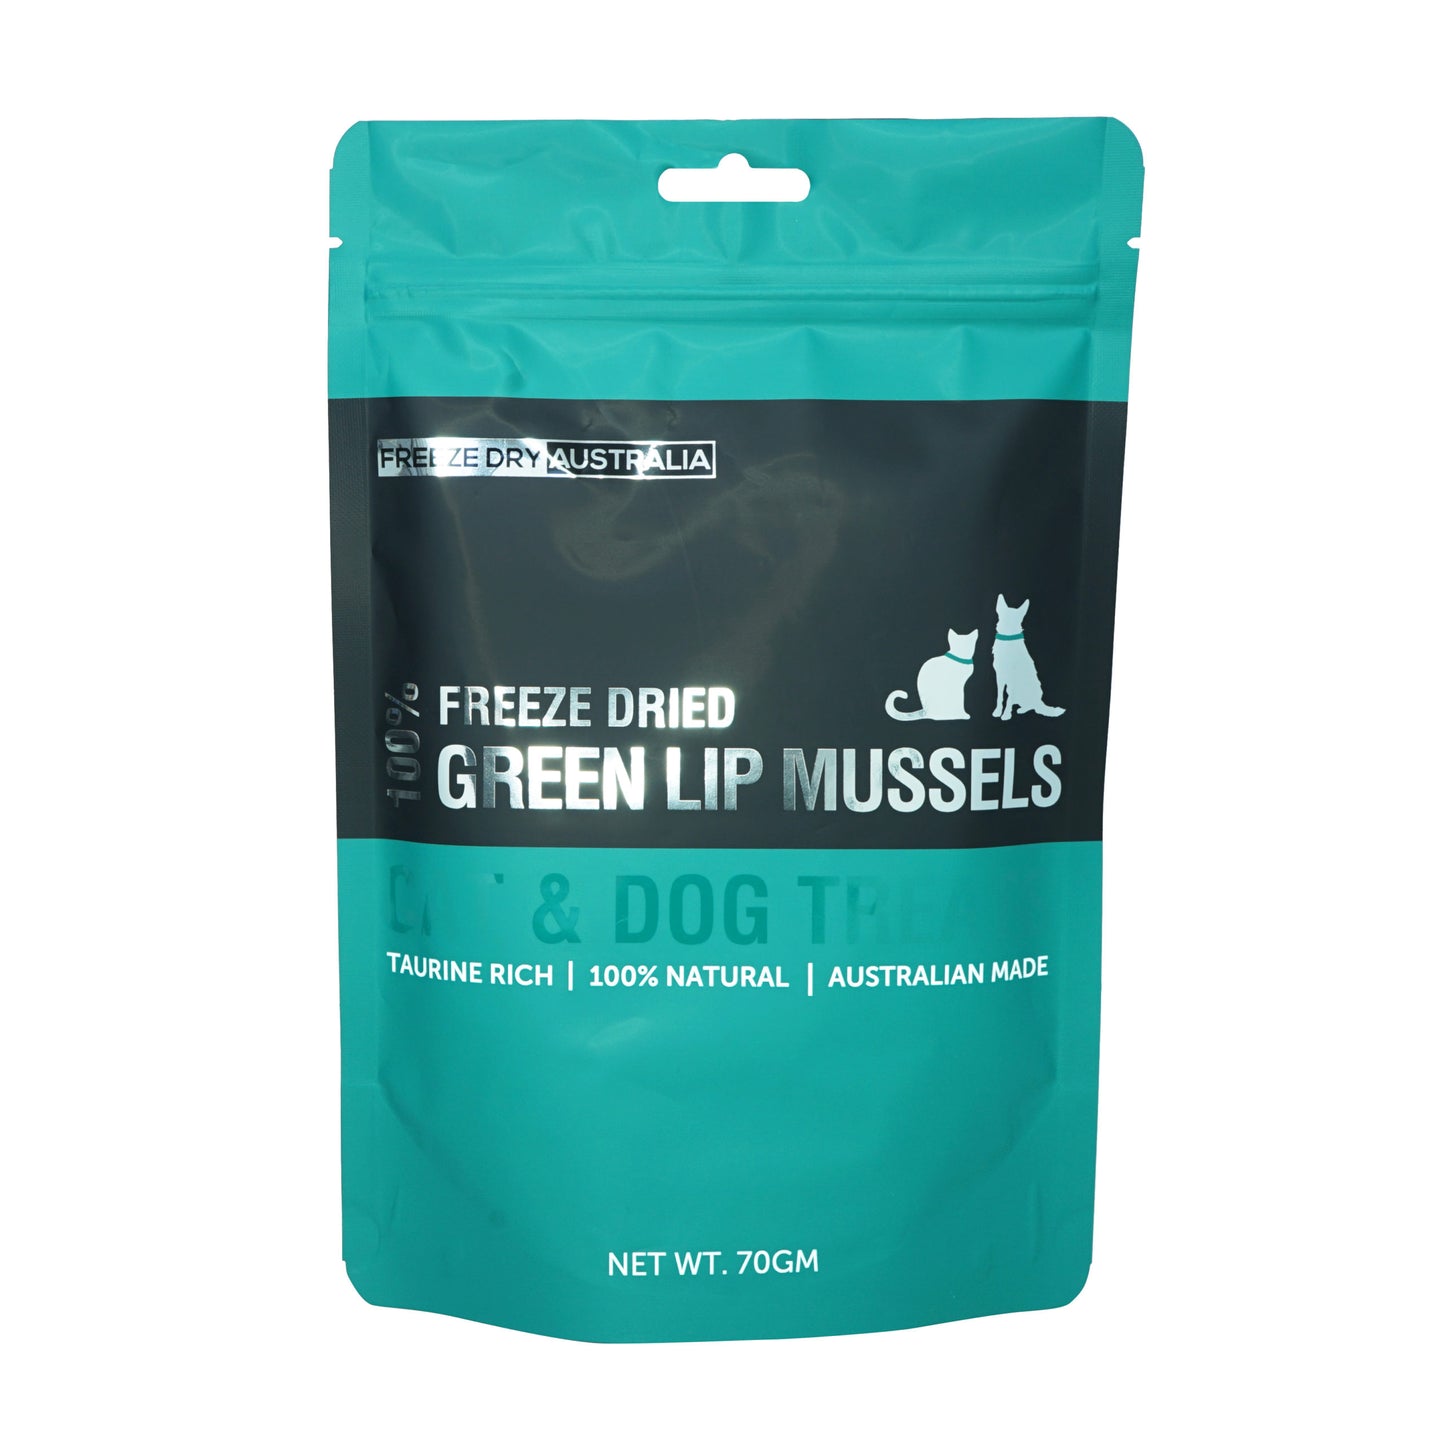 FDA Freeze Dry Australia Green Lip Mussels 70g